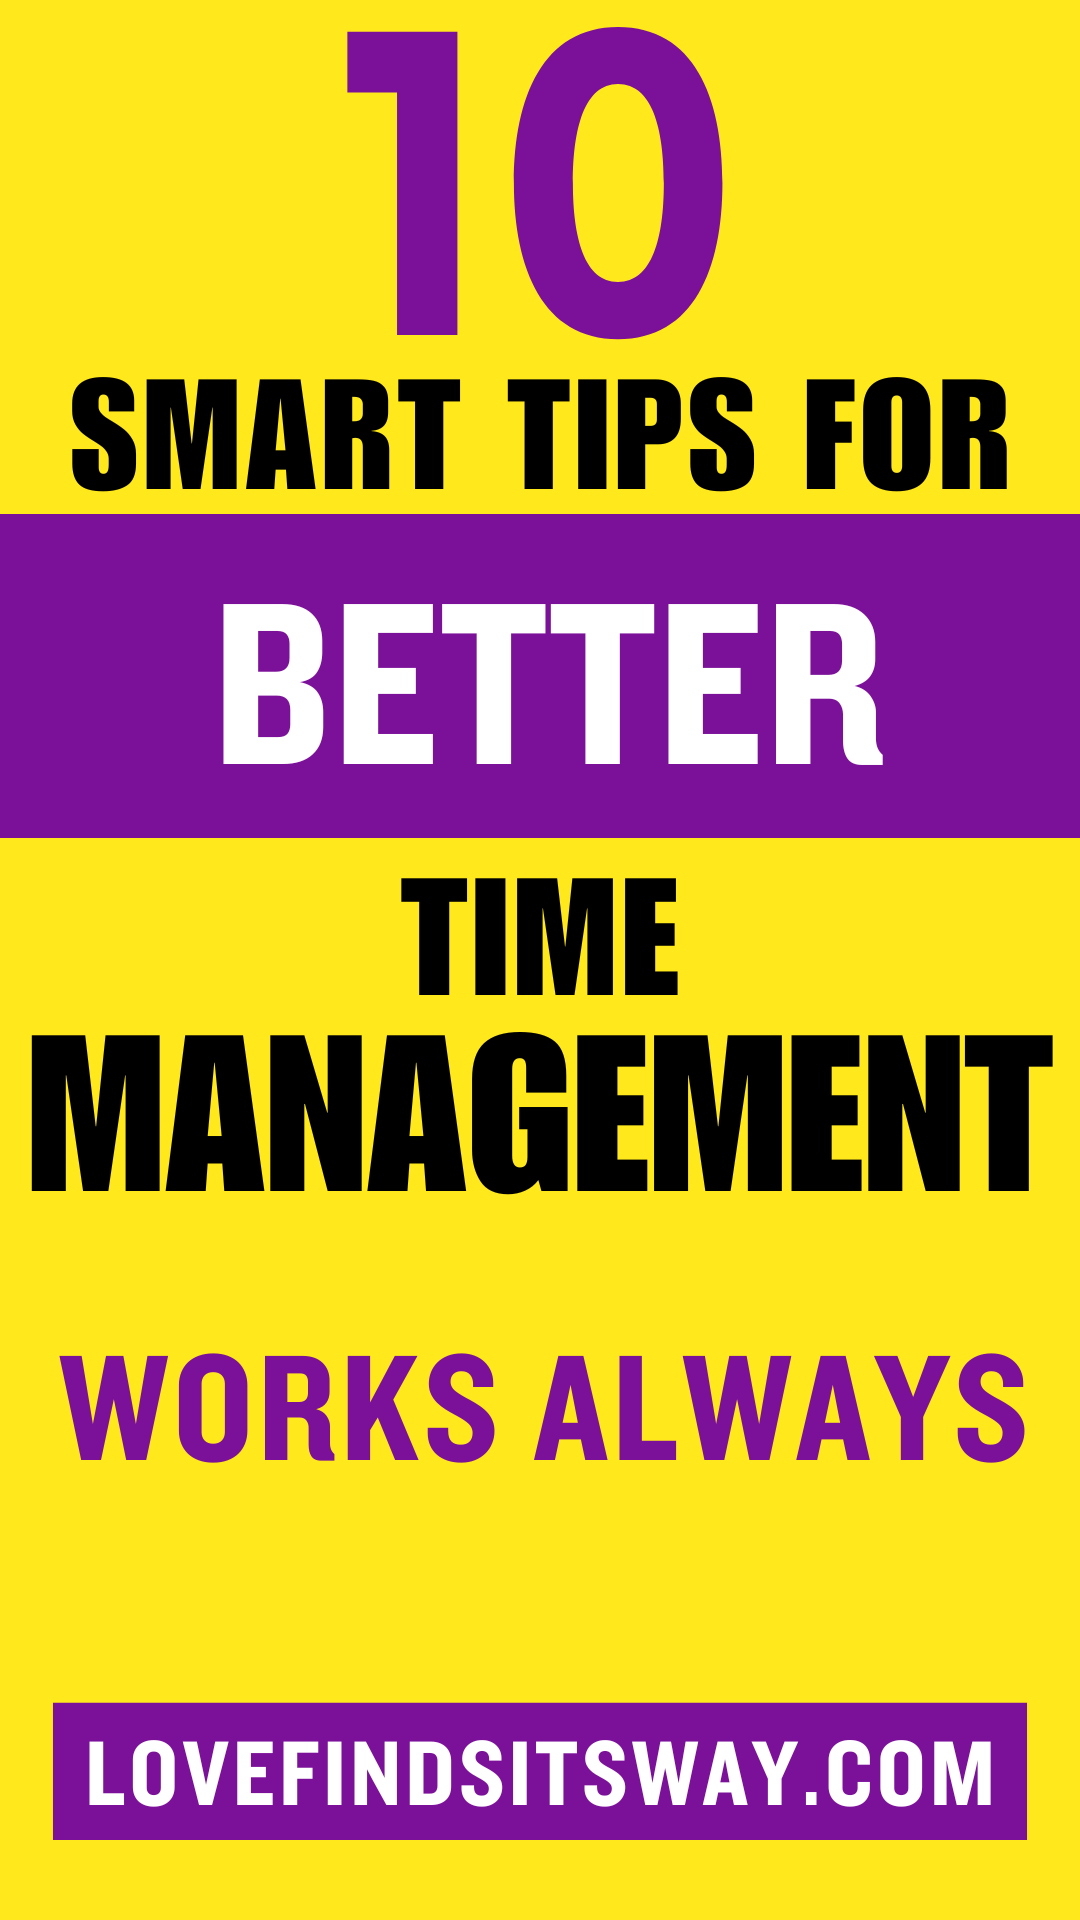 10-Smart-Tips-For-Better-Time-Management-works-always